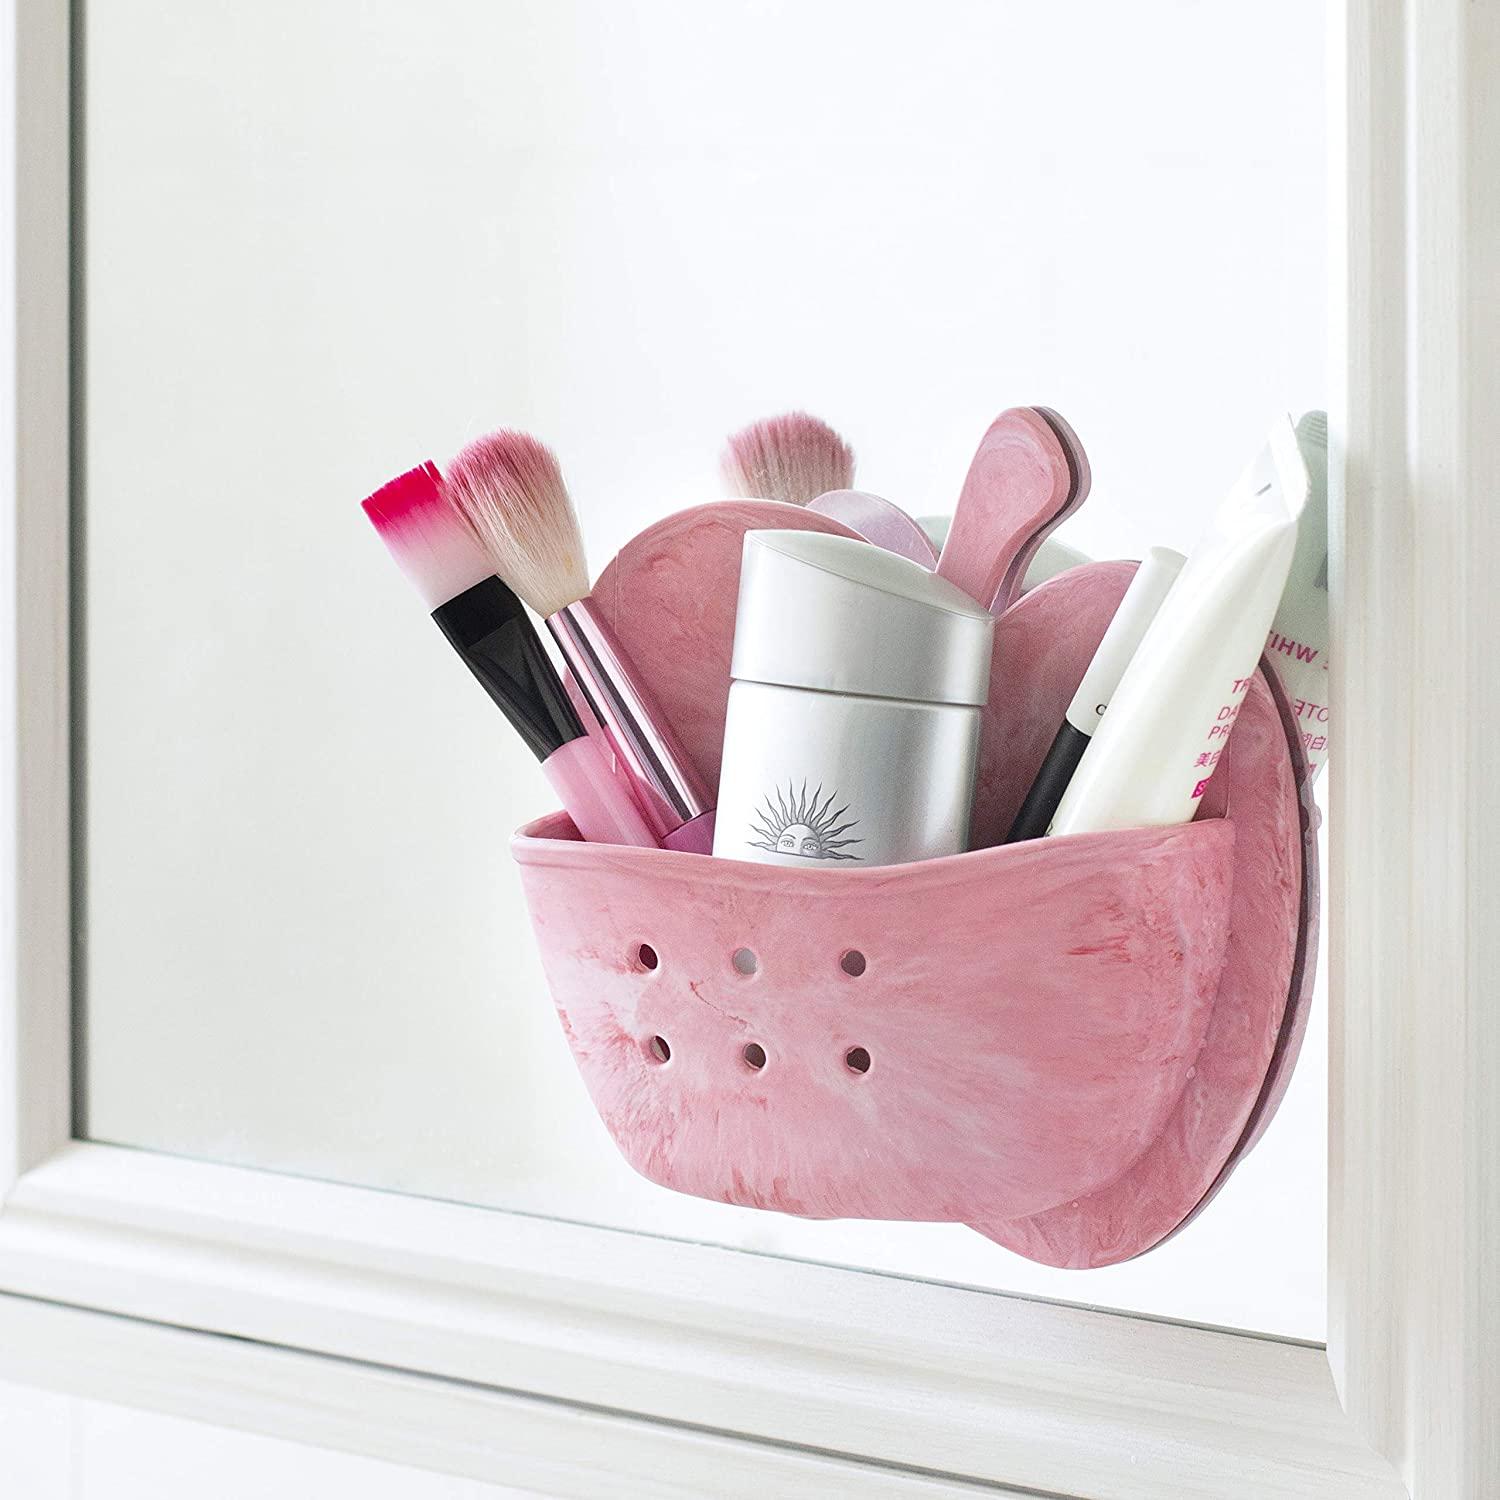 Silicone Makeup Brush Drying Holder, Wall Mounted Makeup Brush